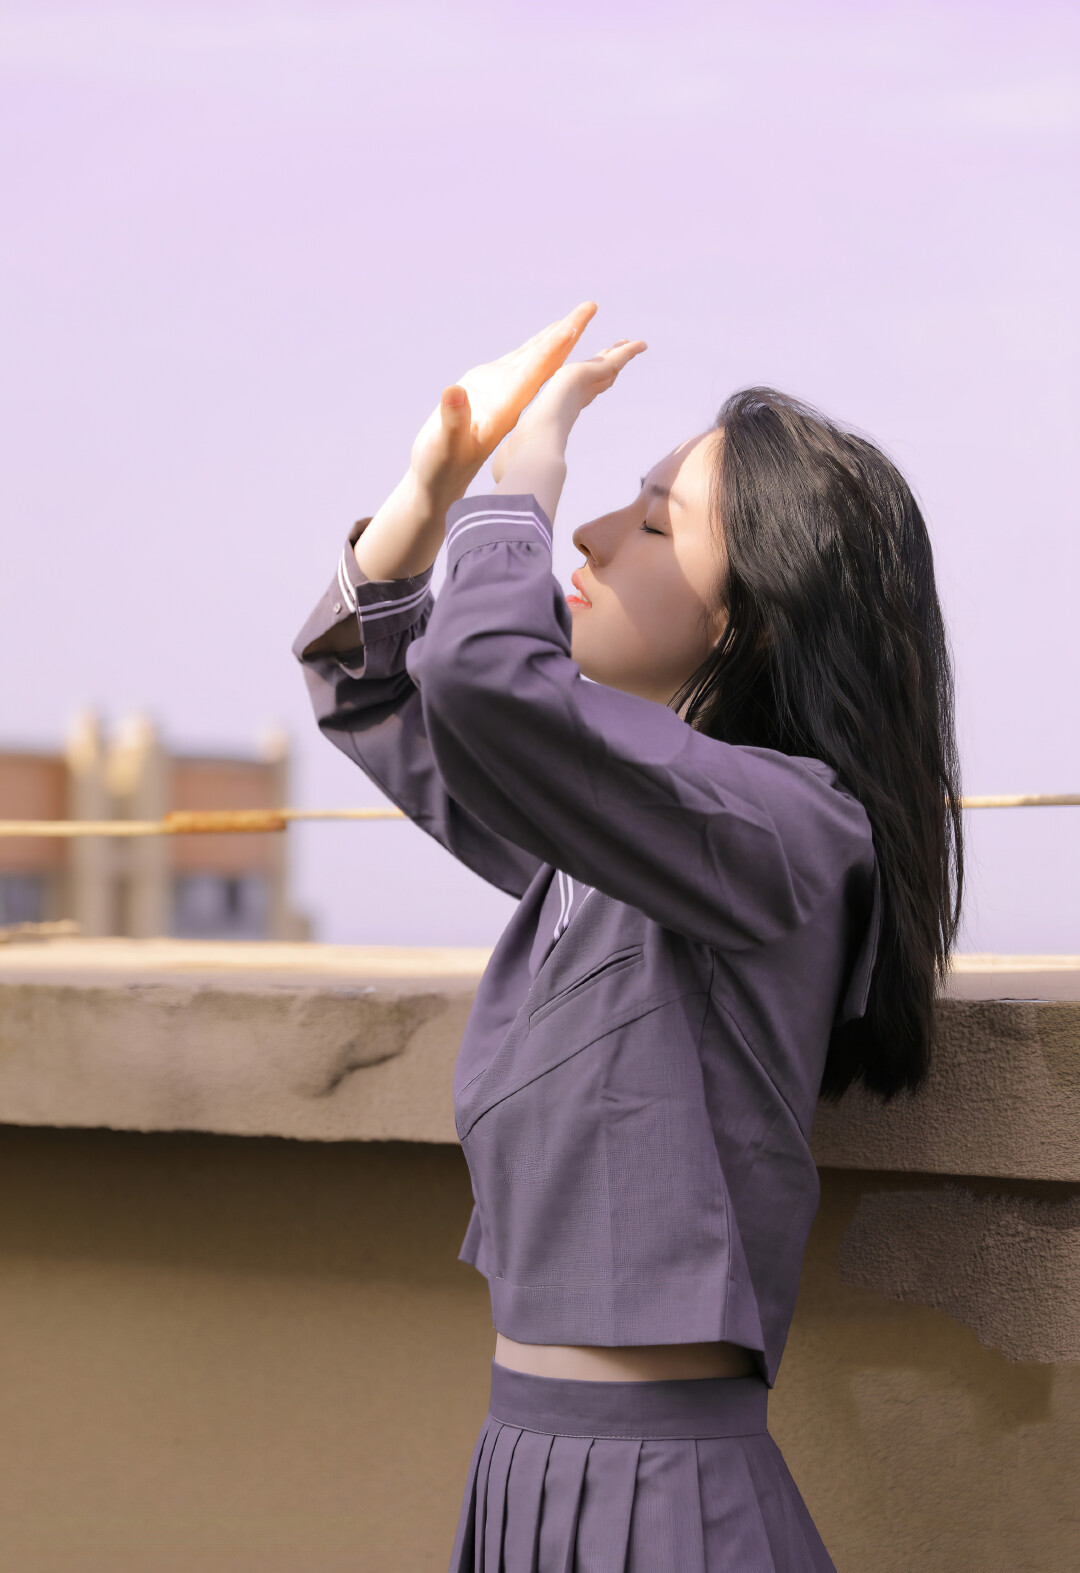 People 1080x1573 Chinese women outdoors long hair sailor uniform schoolgirl black hair closed eyes arms arms up pale school uniform women Asian